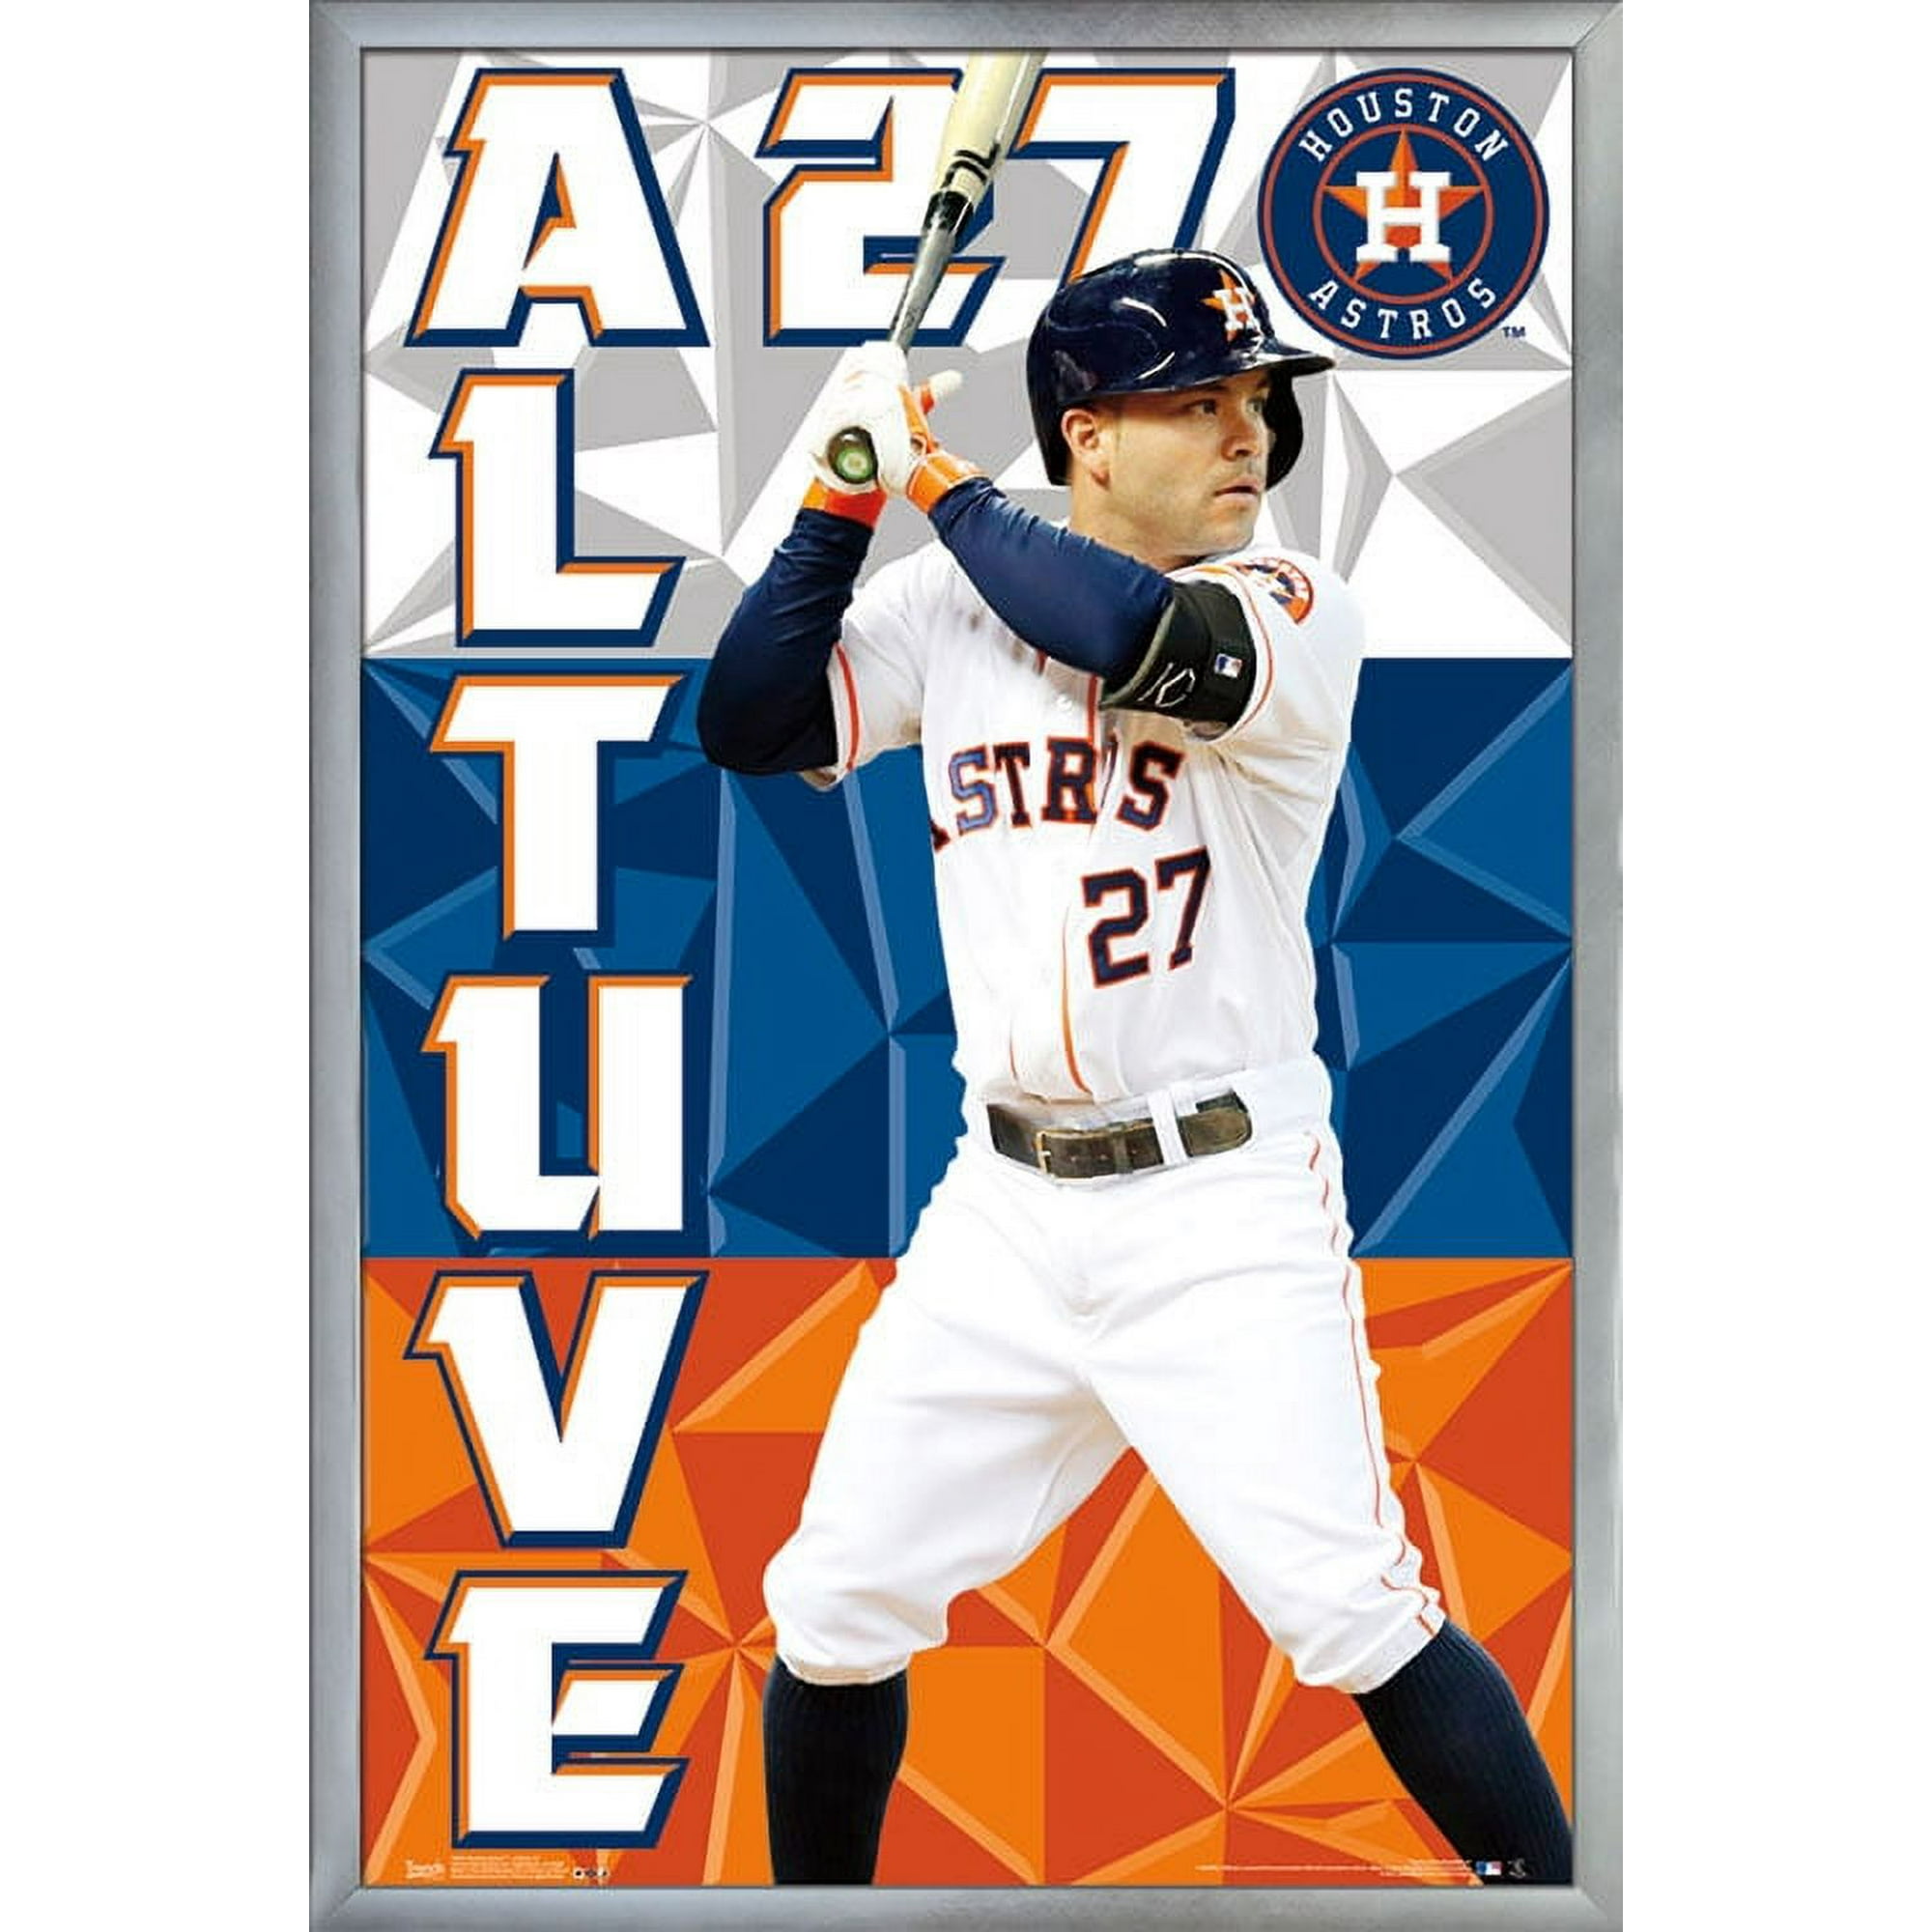 2021 Jose Altuve Signed Houston Astros Jersey, MLB Authentic